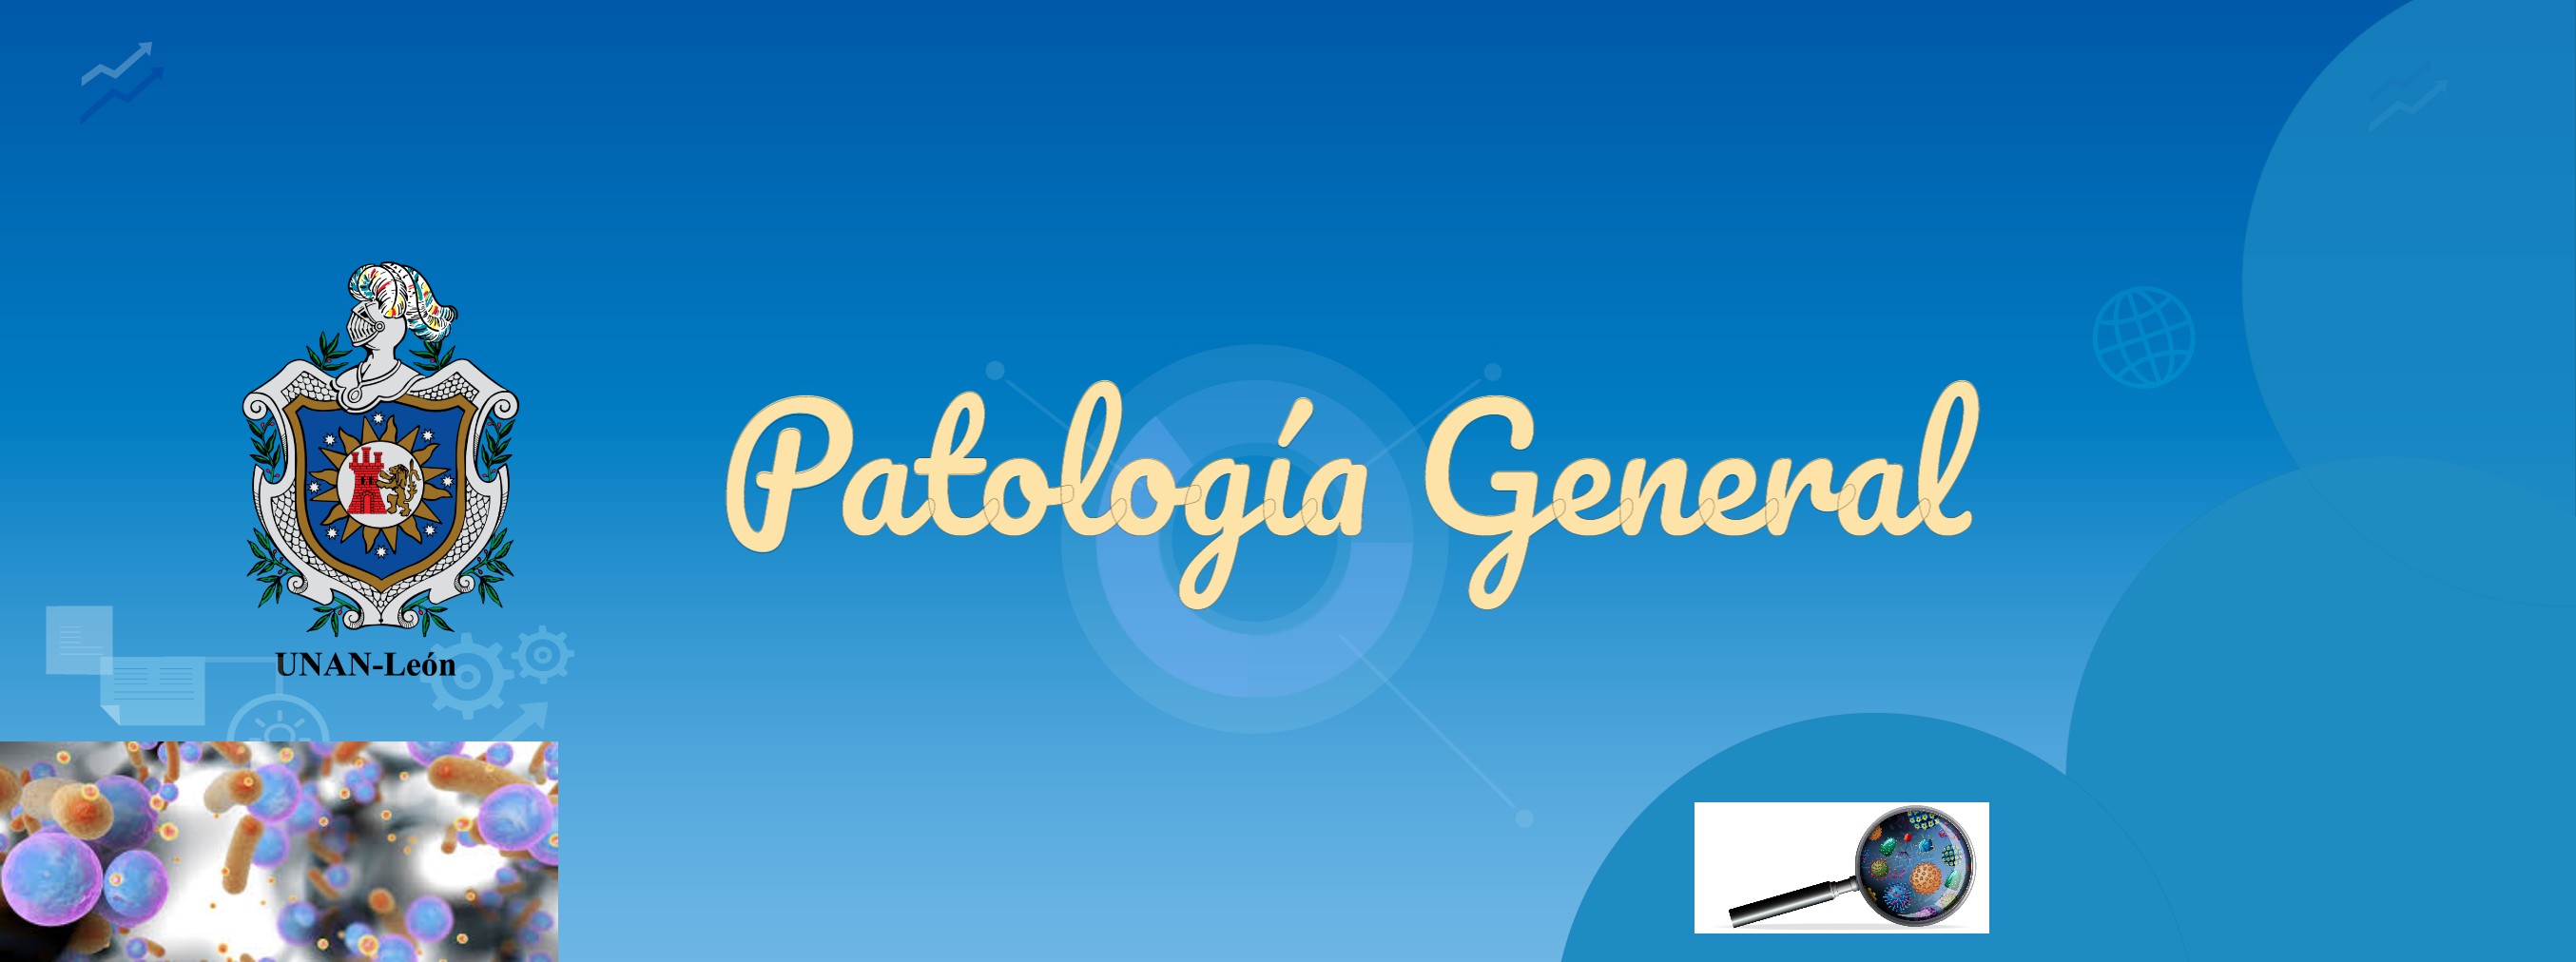 PATOLOGIA GENERAL